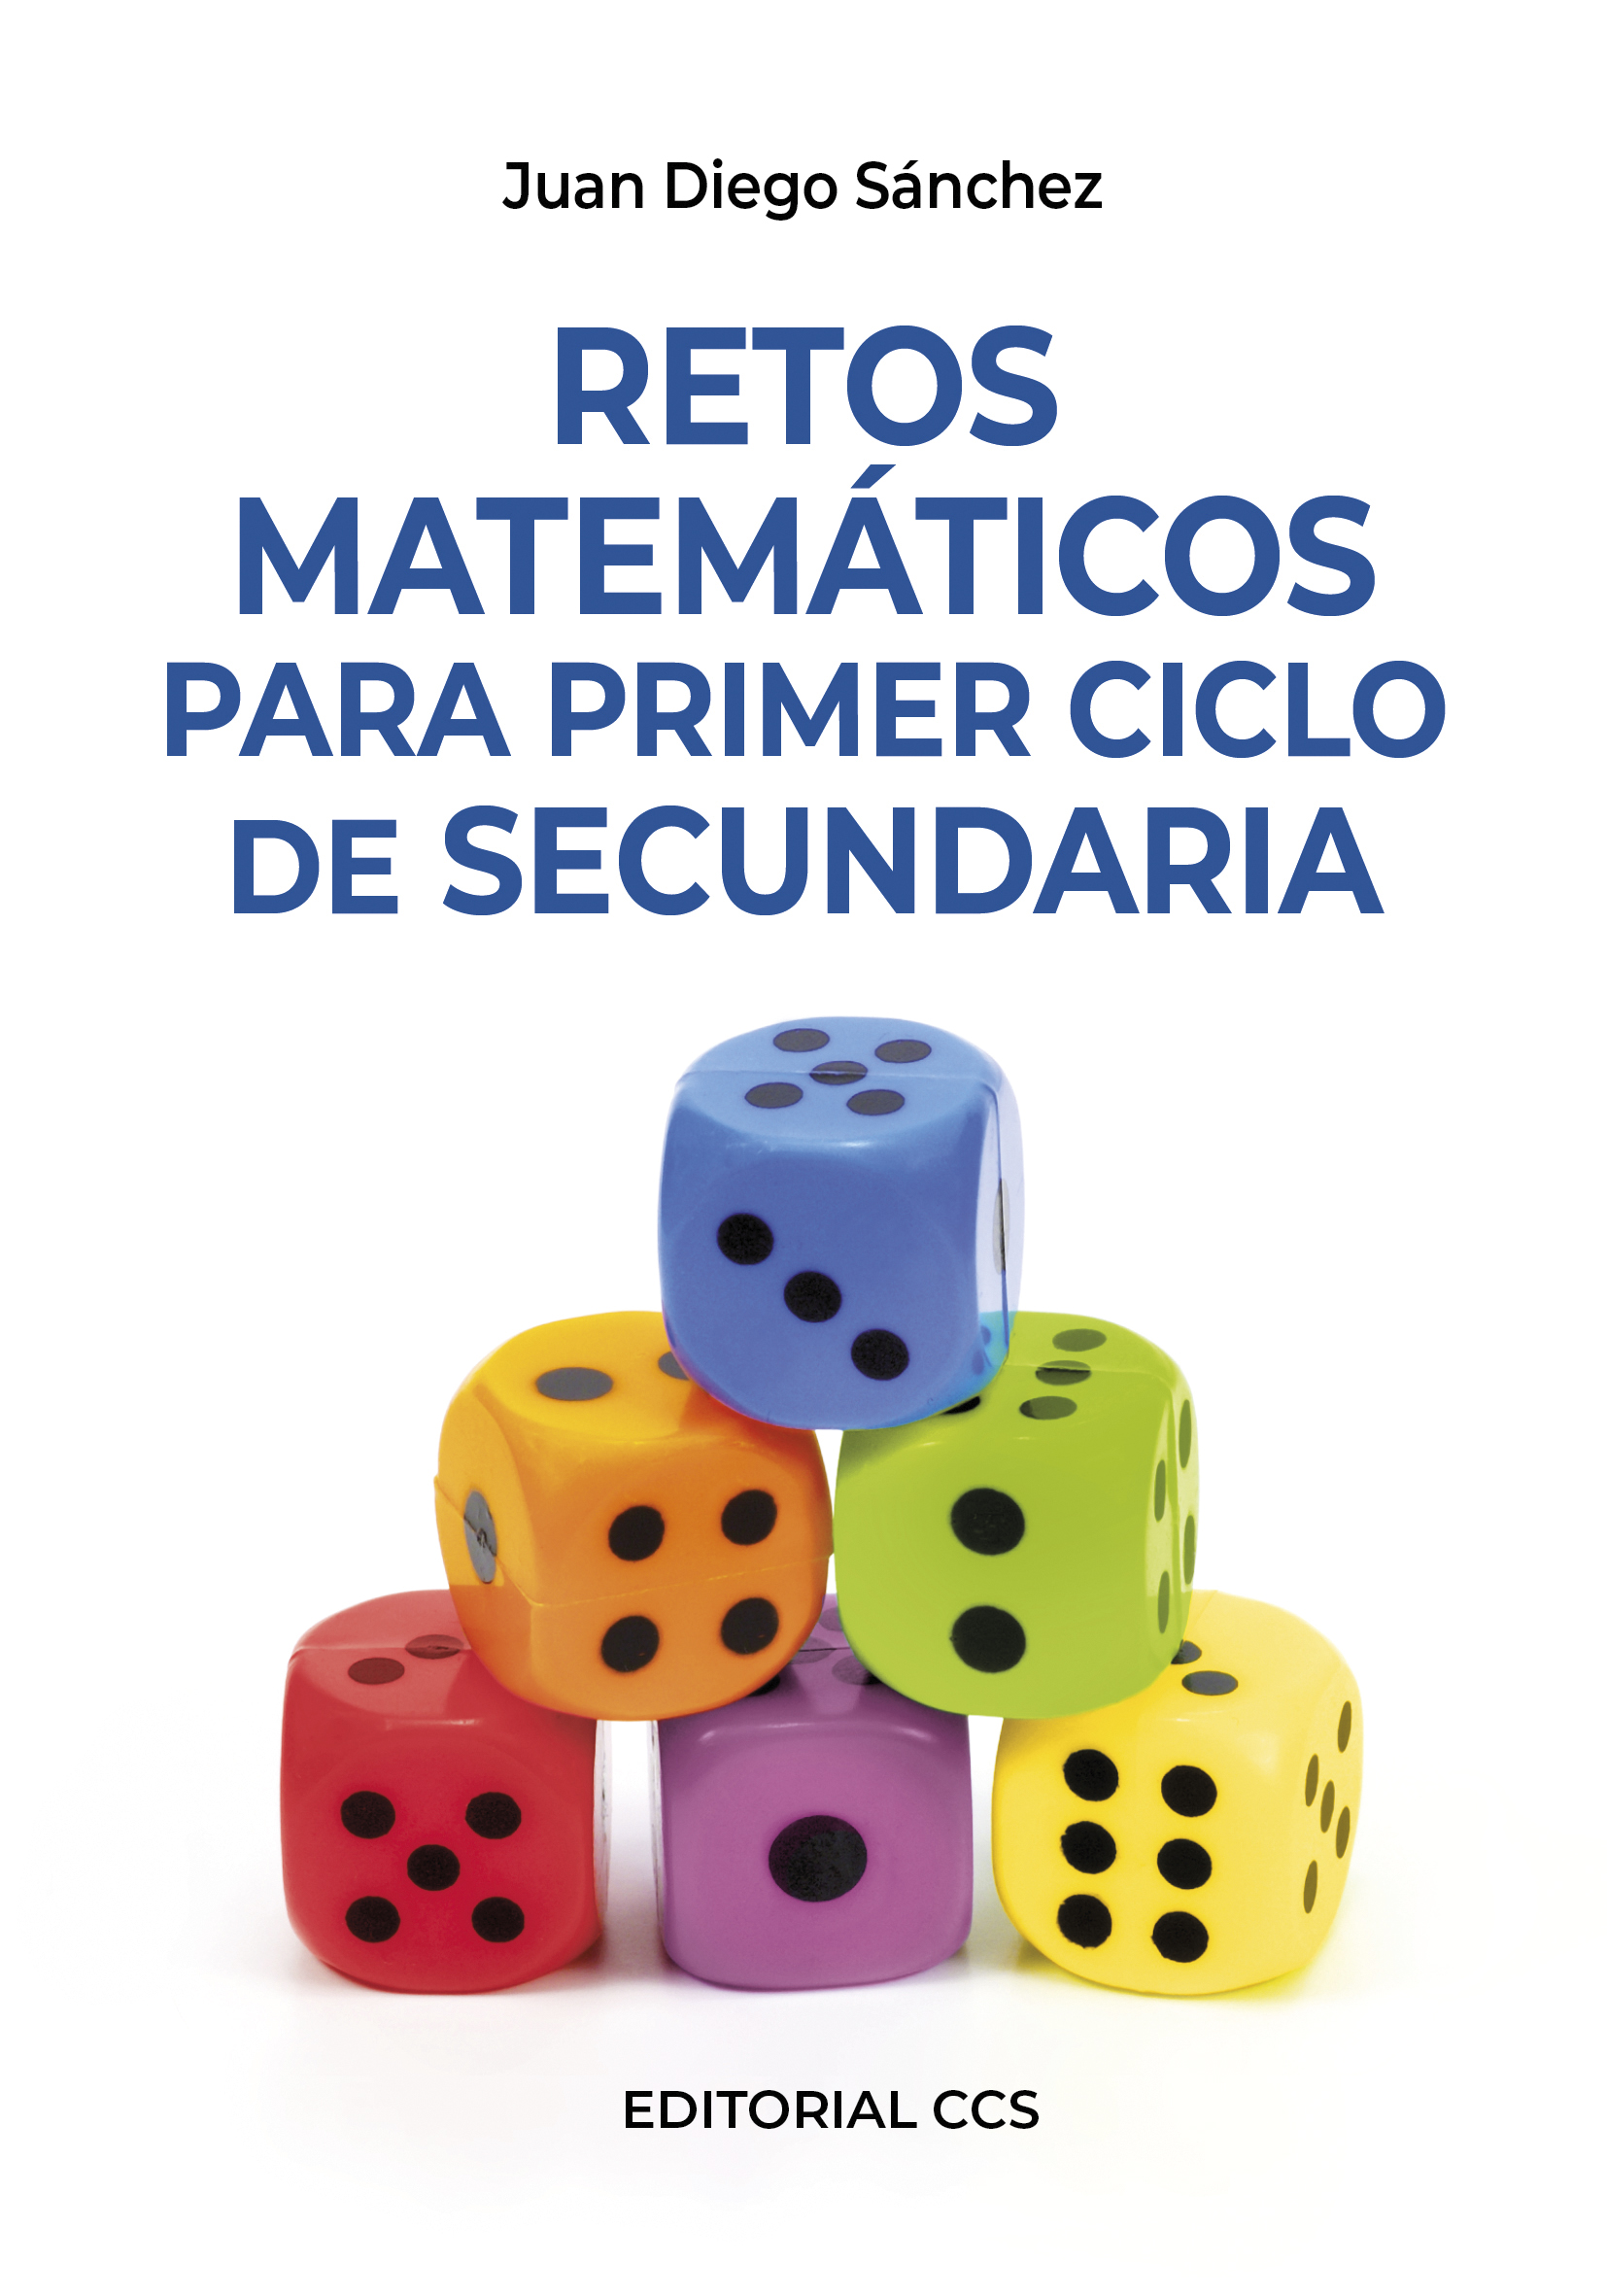 Editorial CCS - Libro: RETOS MATEMÁTICOS PARA PRIMER CICLO DE SECUNDARIA